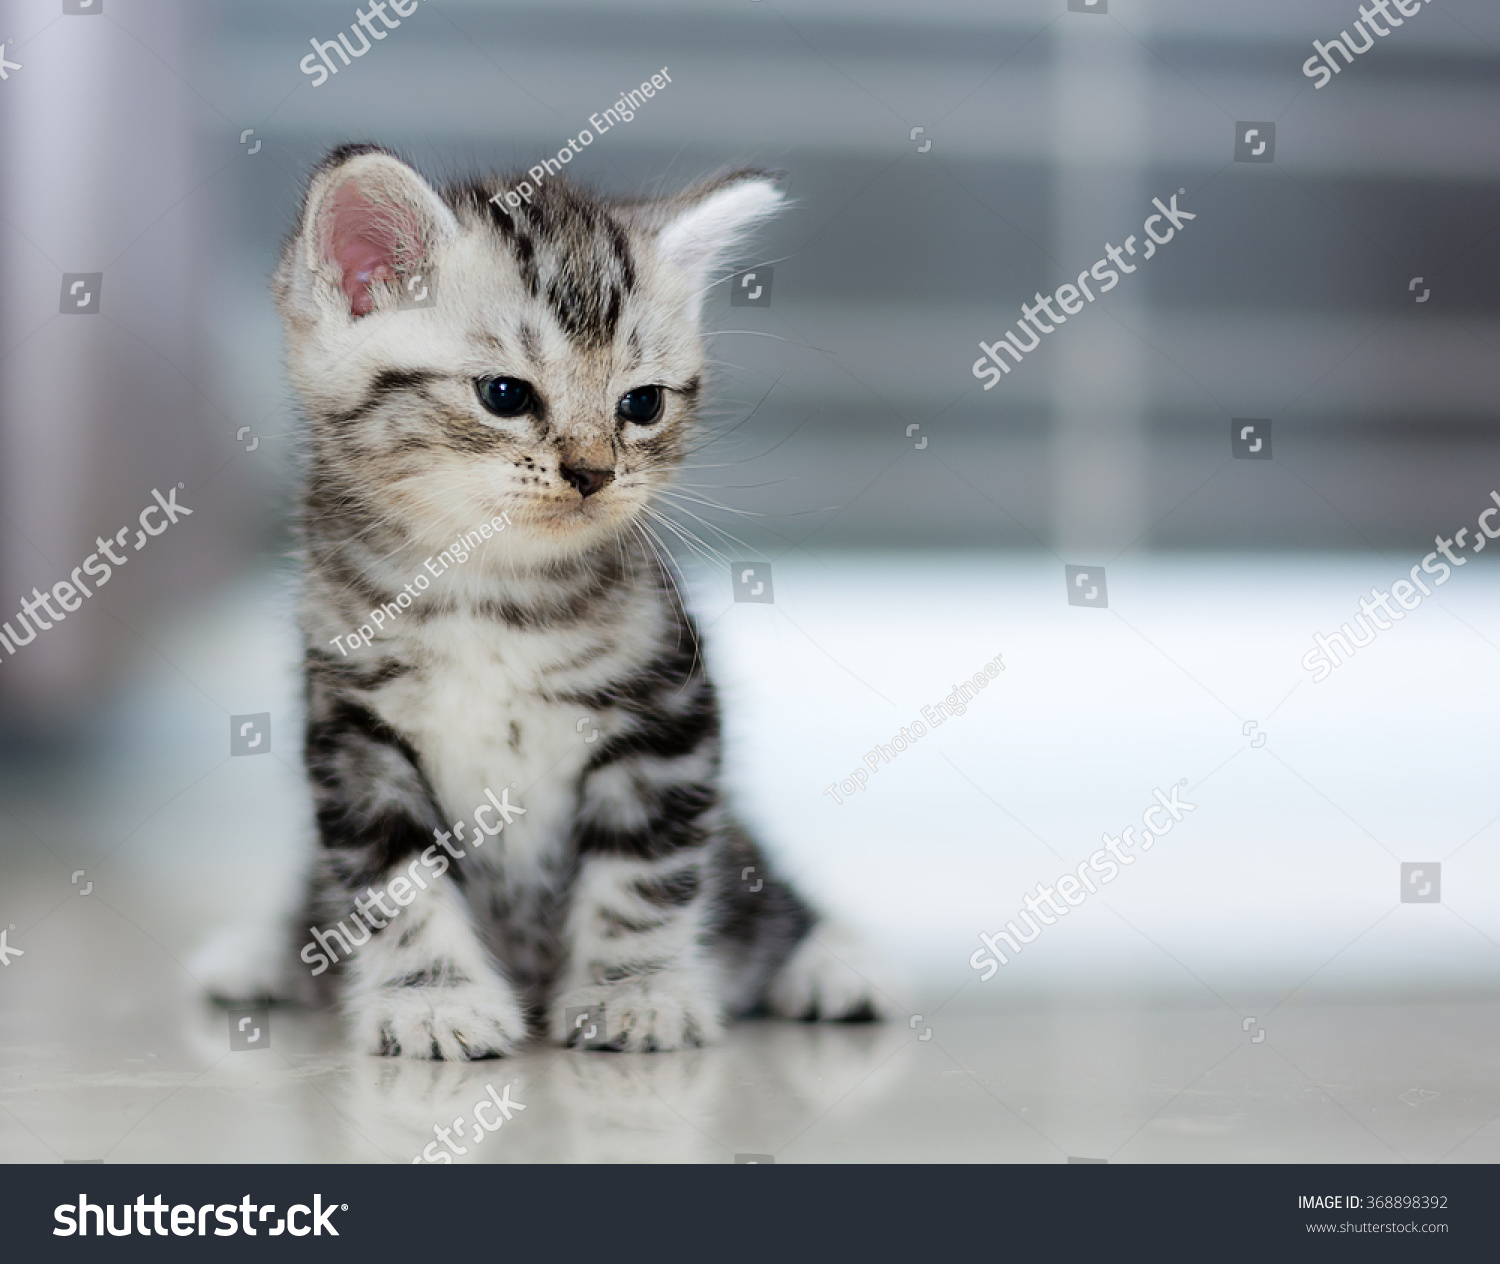 Cute American shorthair cat kitten #368898392